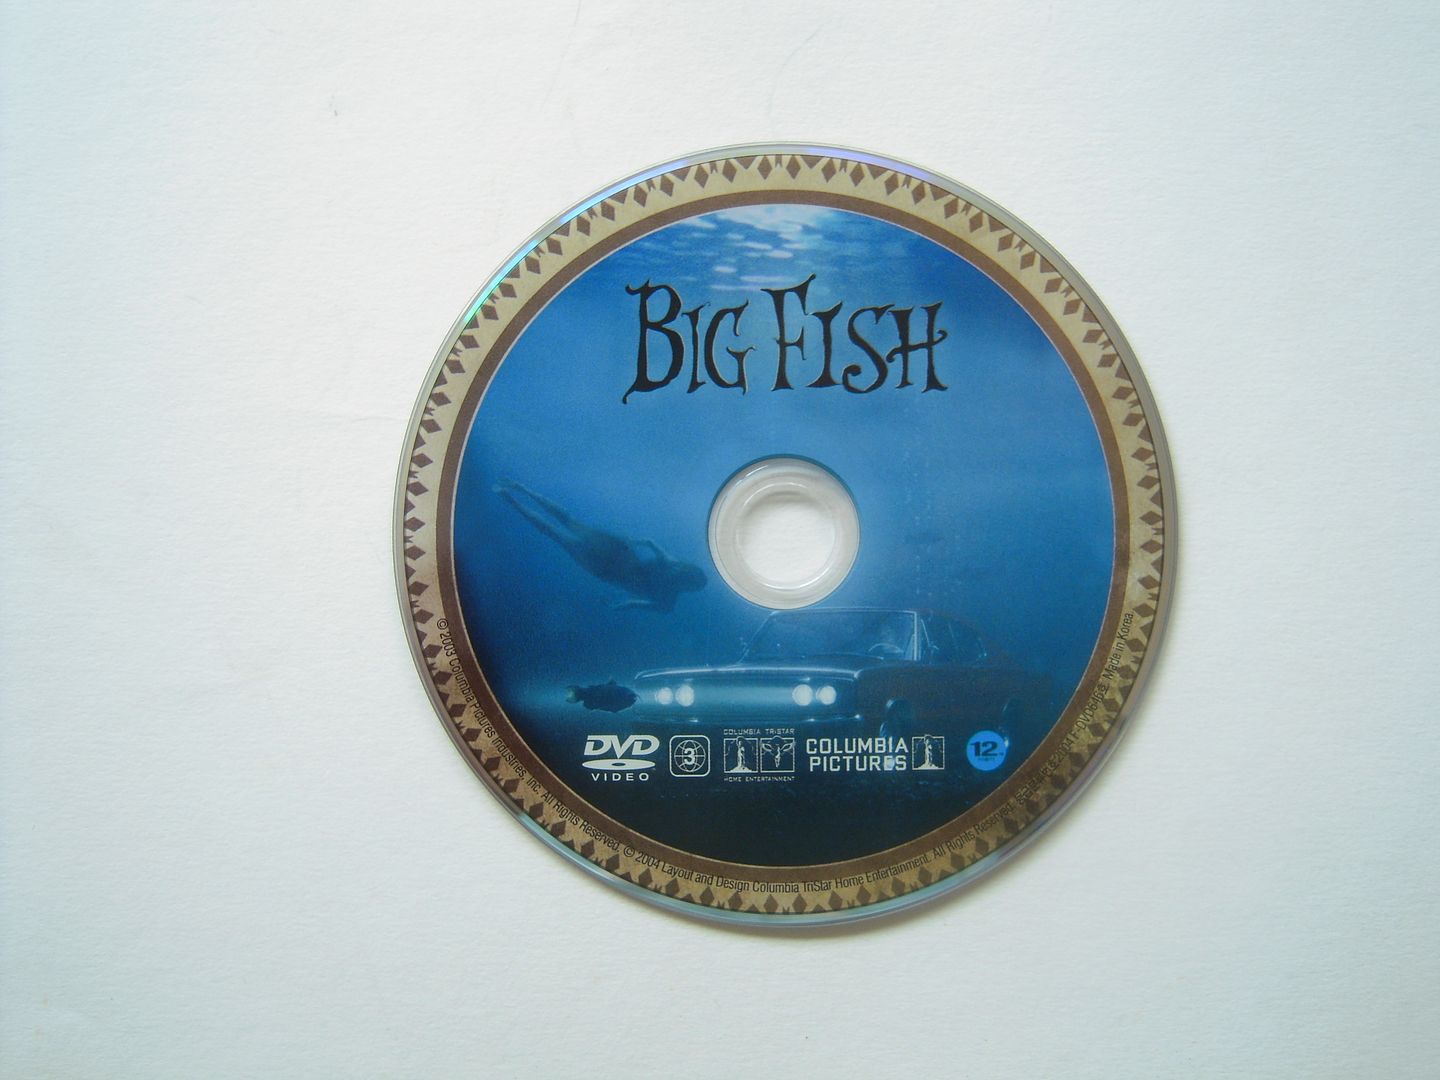 Big Fish - DVD/Bluray DSCN2360